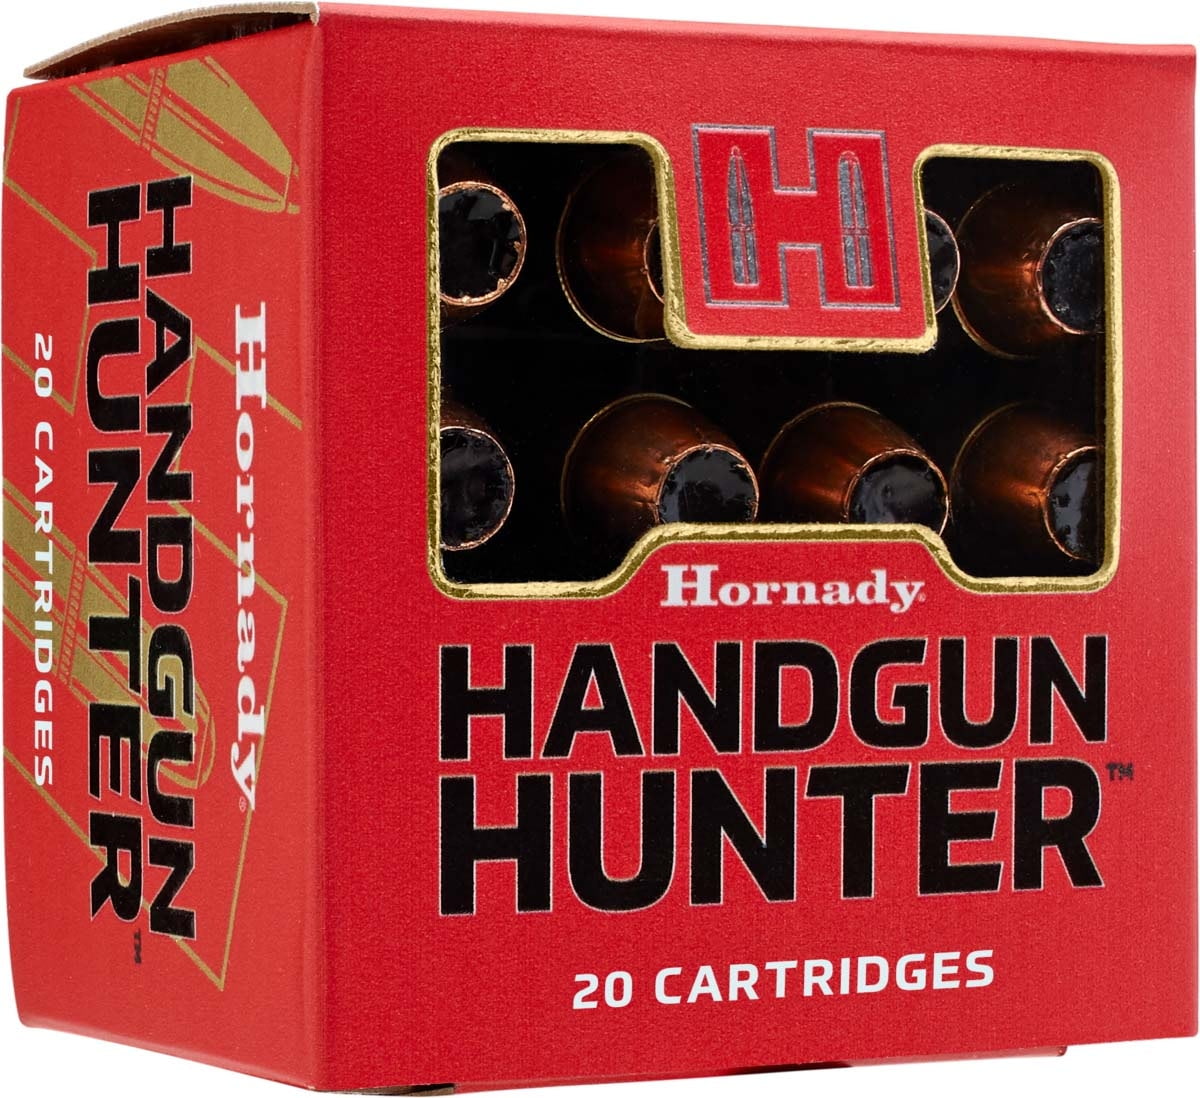 Hornady Handgun Hunter .357 Magnum 130 grain Flex Tip Brass Cased Centerfire Pistol Ammunition